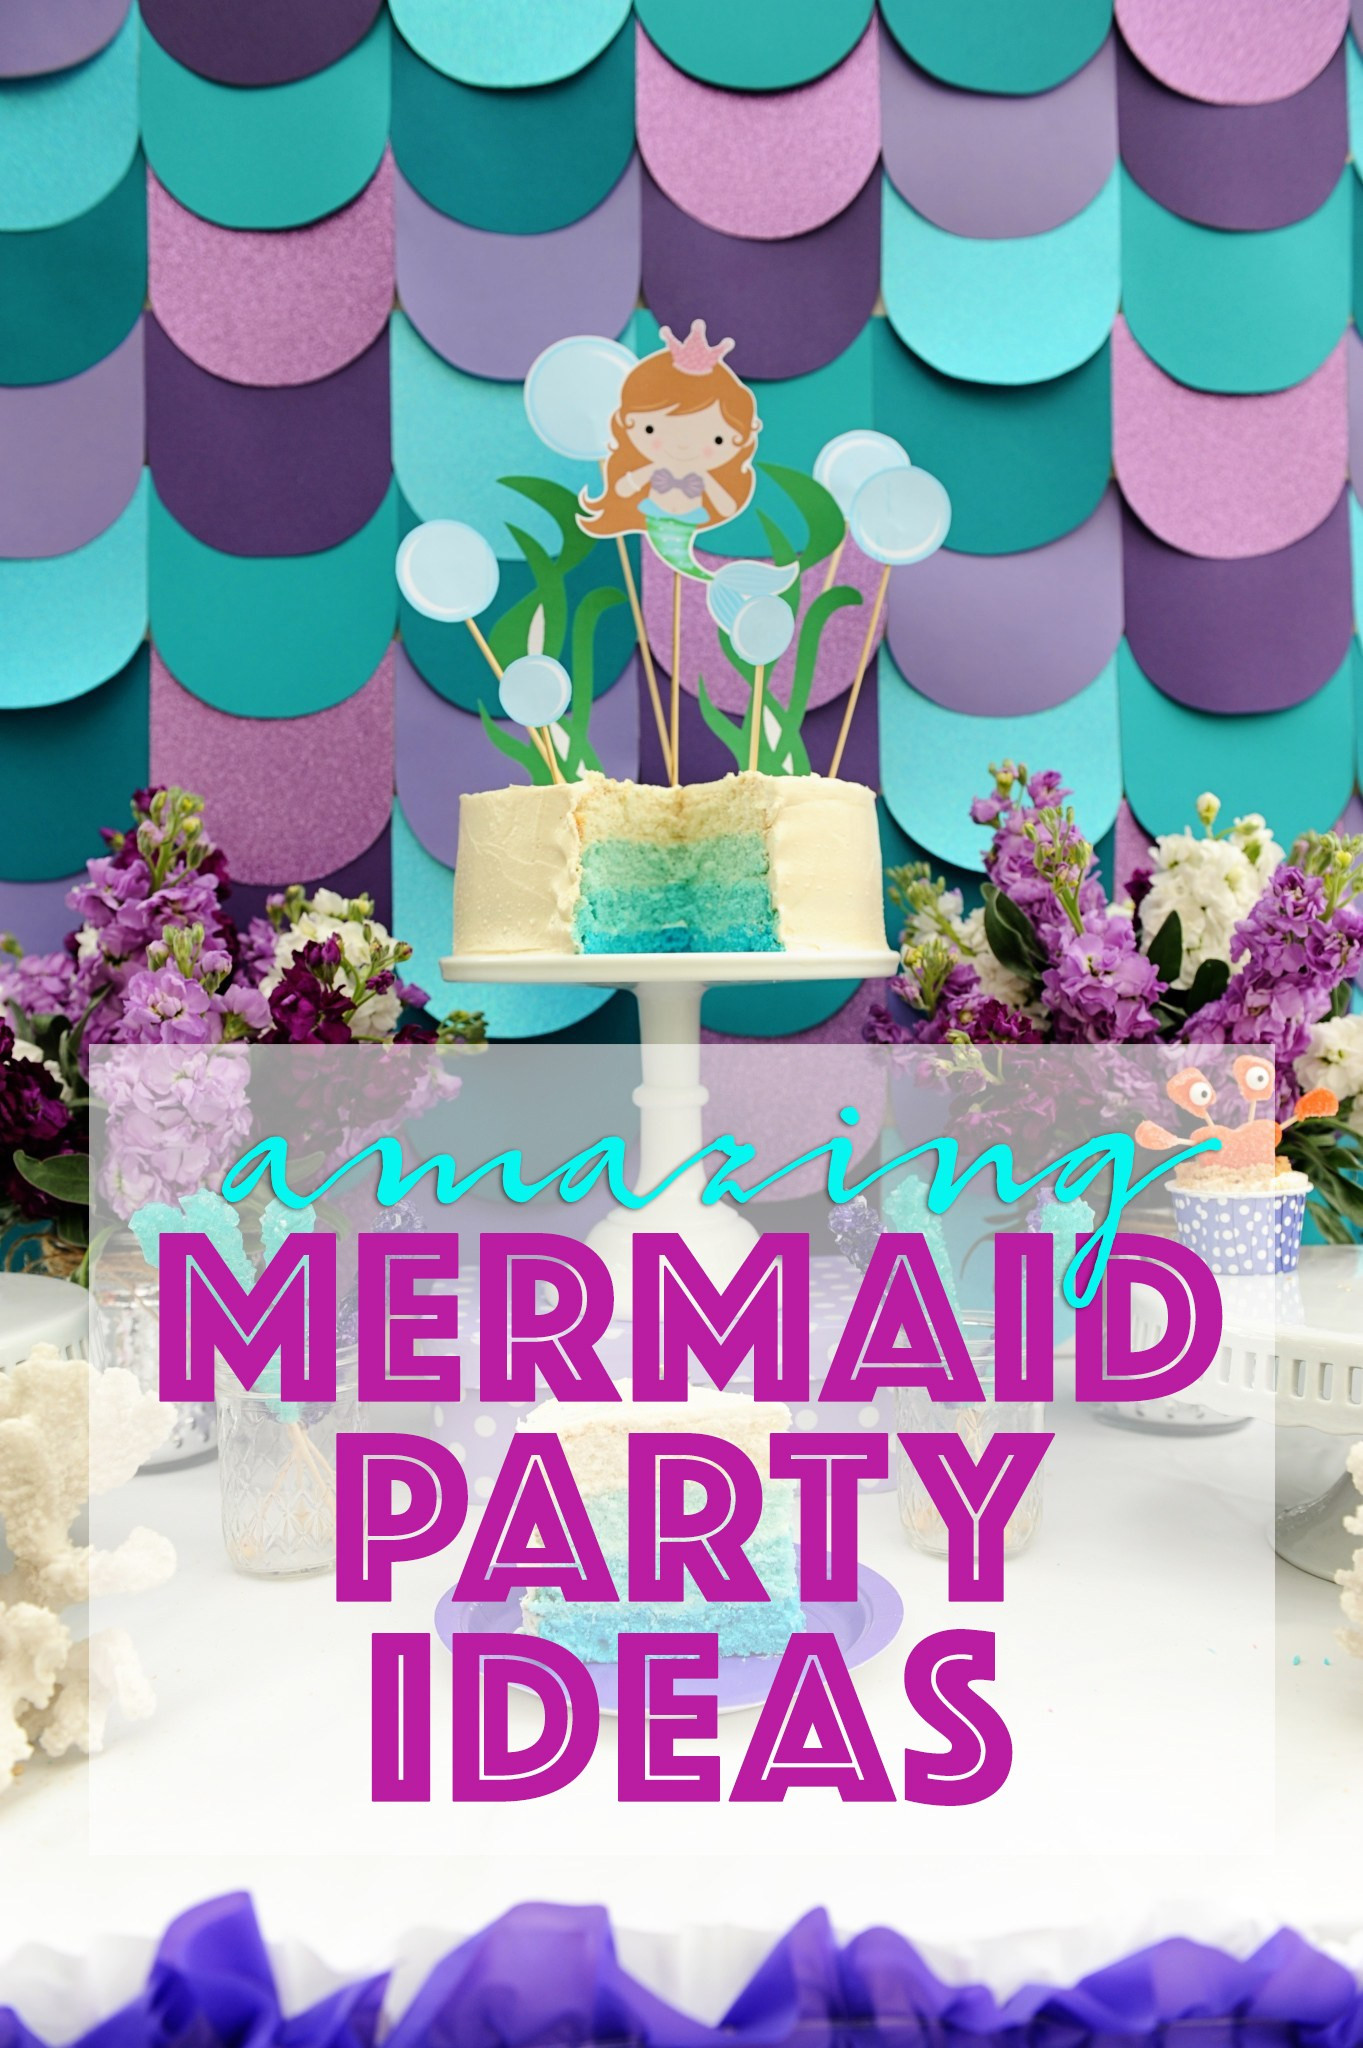 Little Mermaid Pool Party Ideas
 Mermaid Birthday Pool Party Ideas DIY